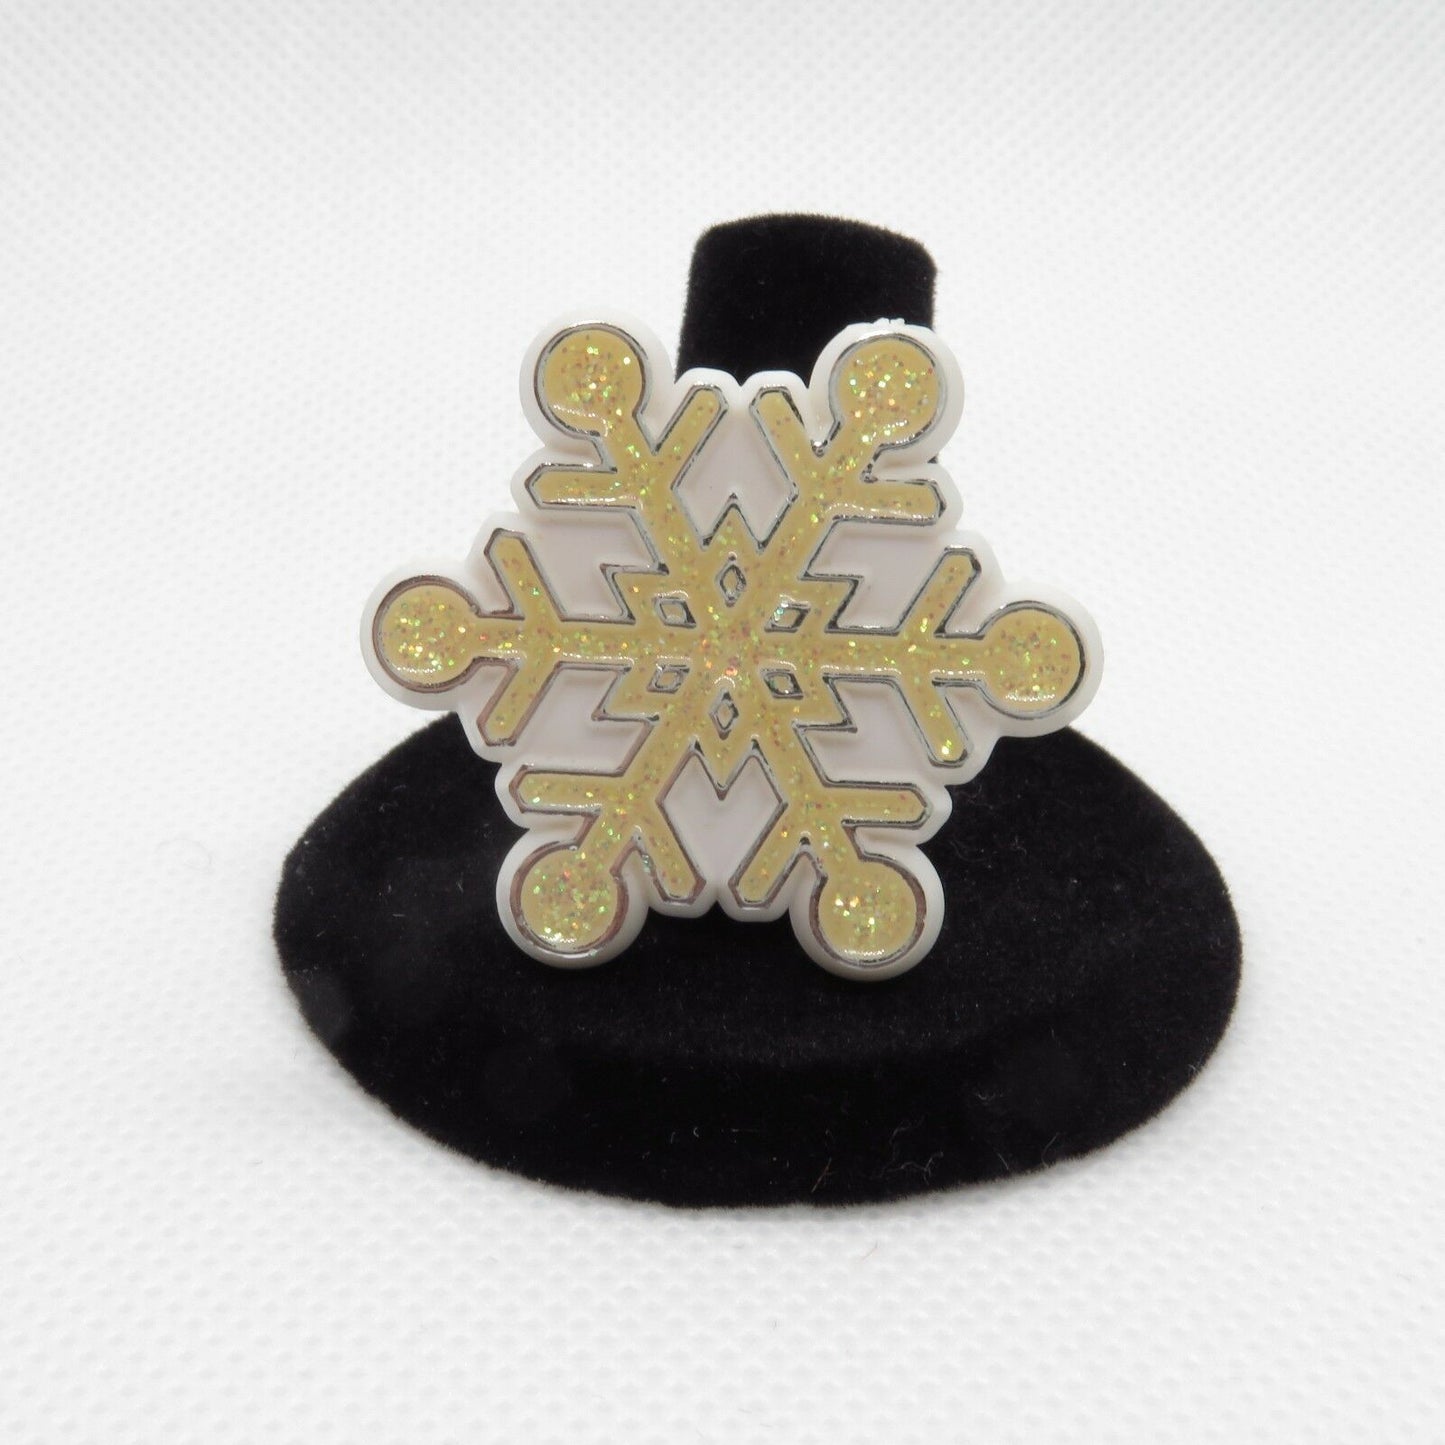 Snowflake Winter Christmas Pin Brooch Hallmark Vintage Holiday 1987 Jewelry - At Grandma's Table